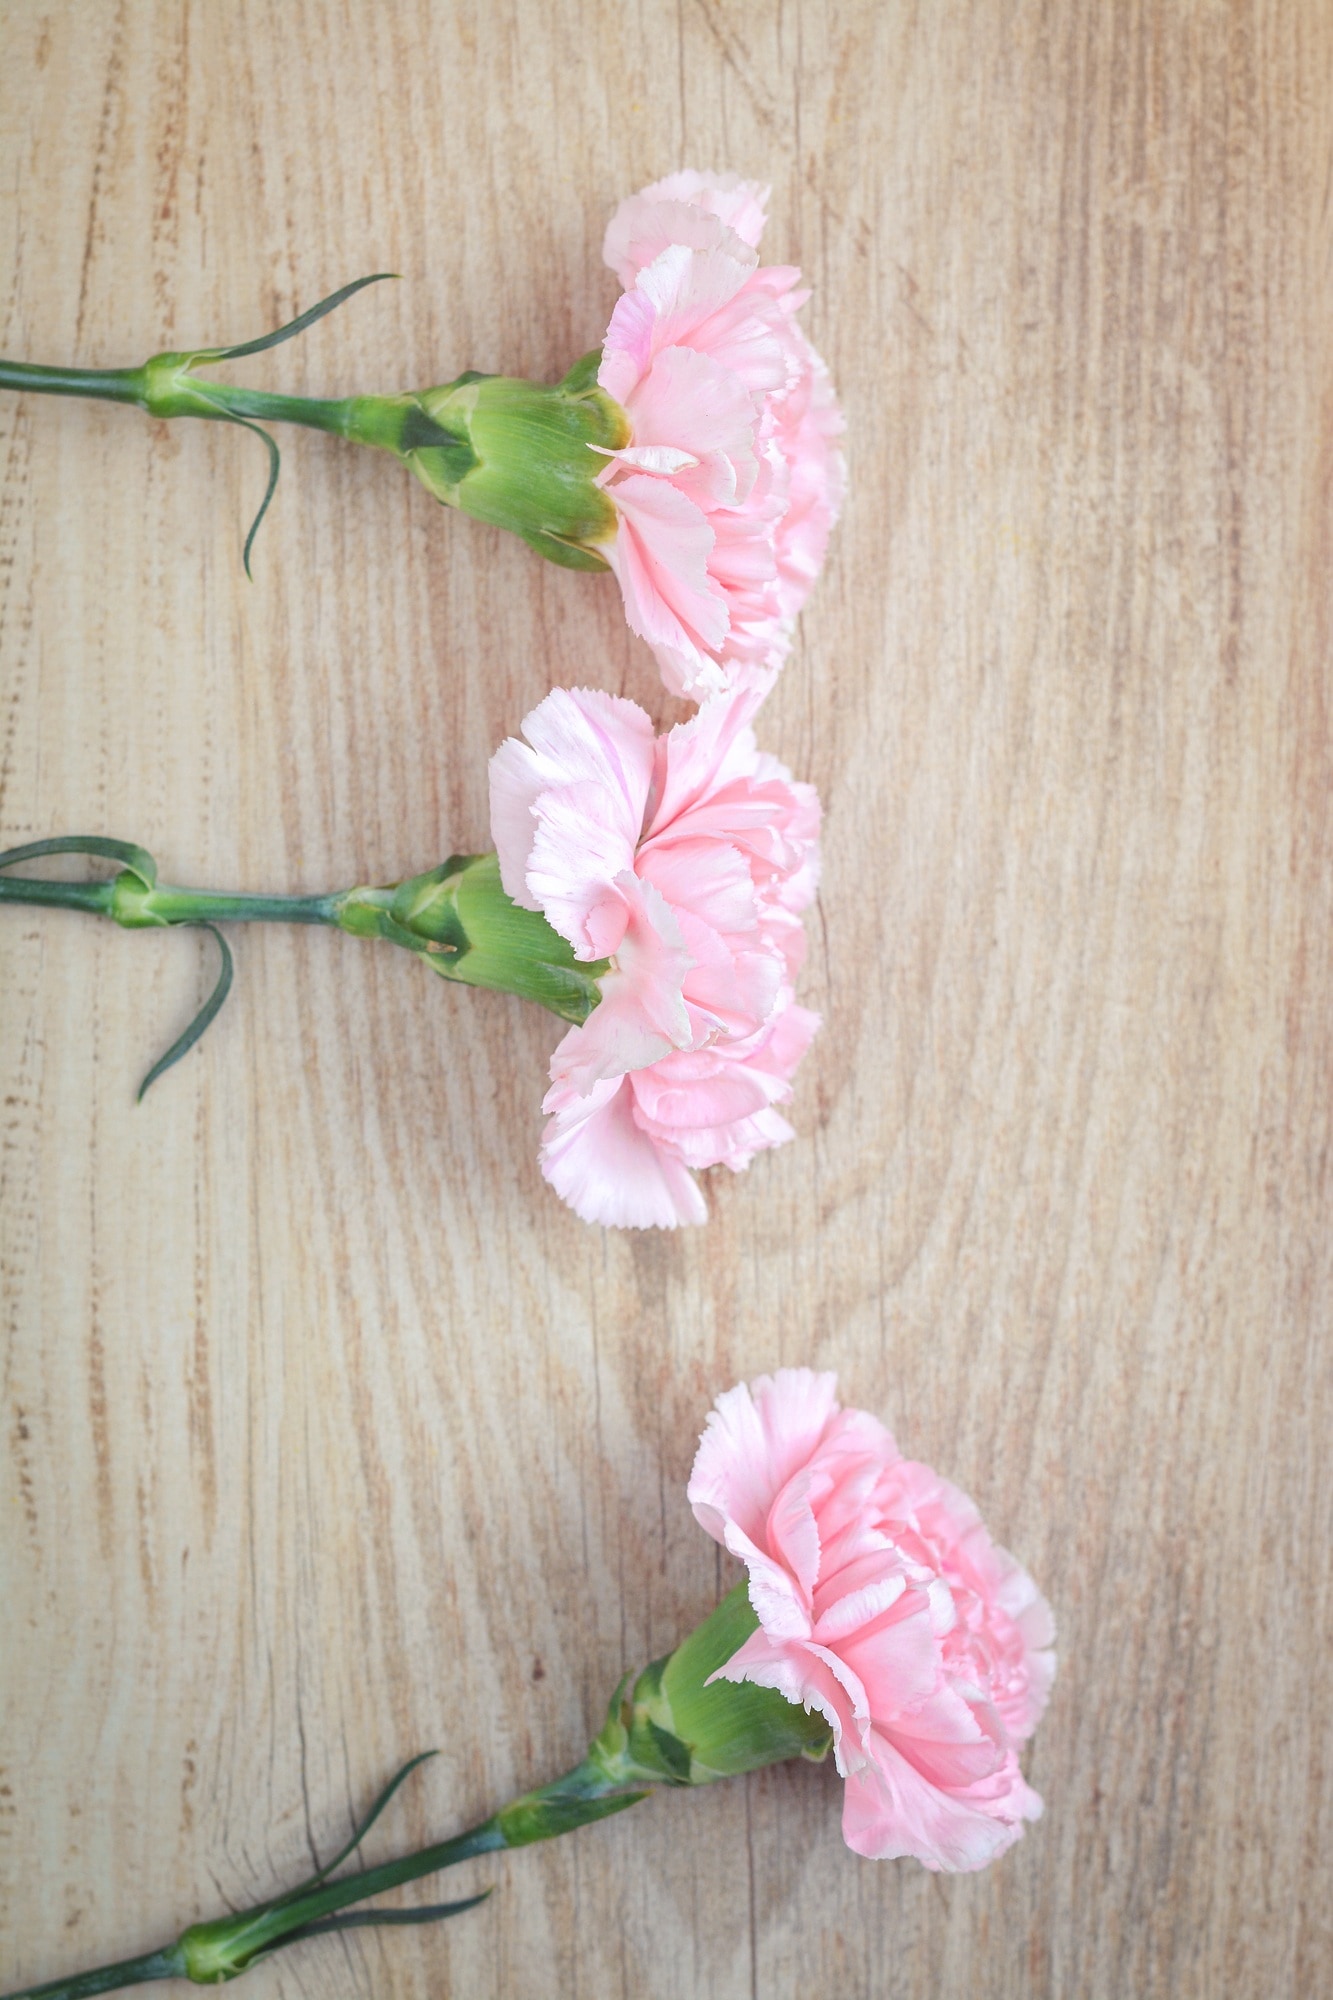 Pink Carnation Flowers Image